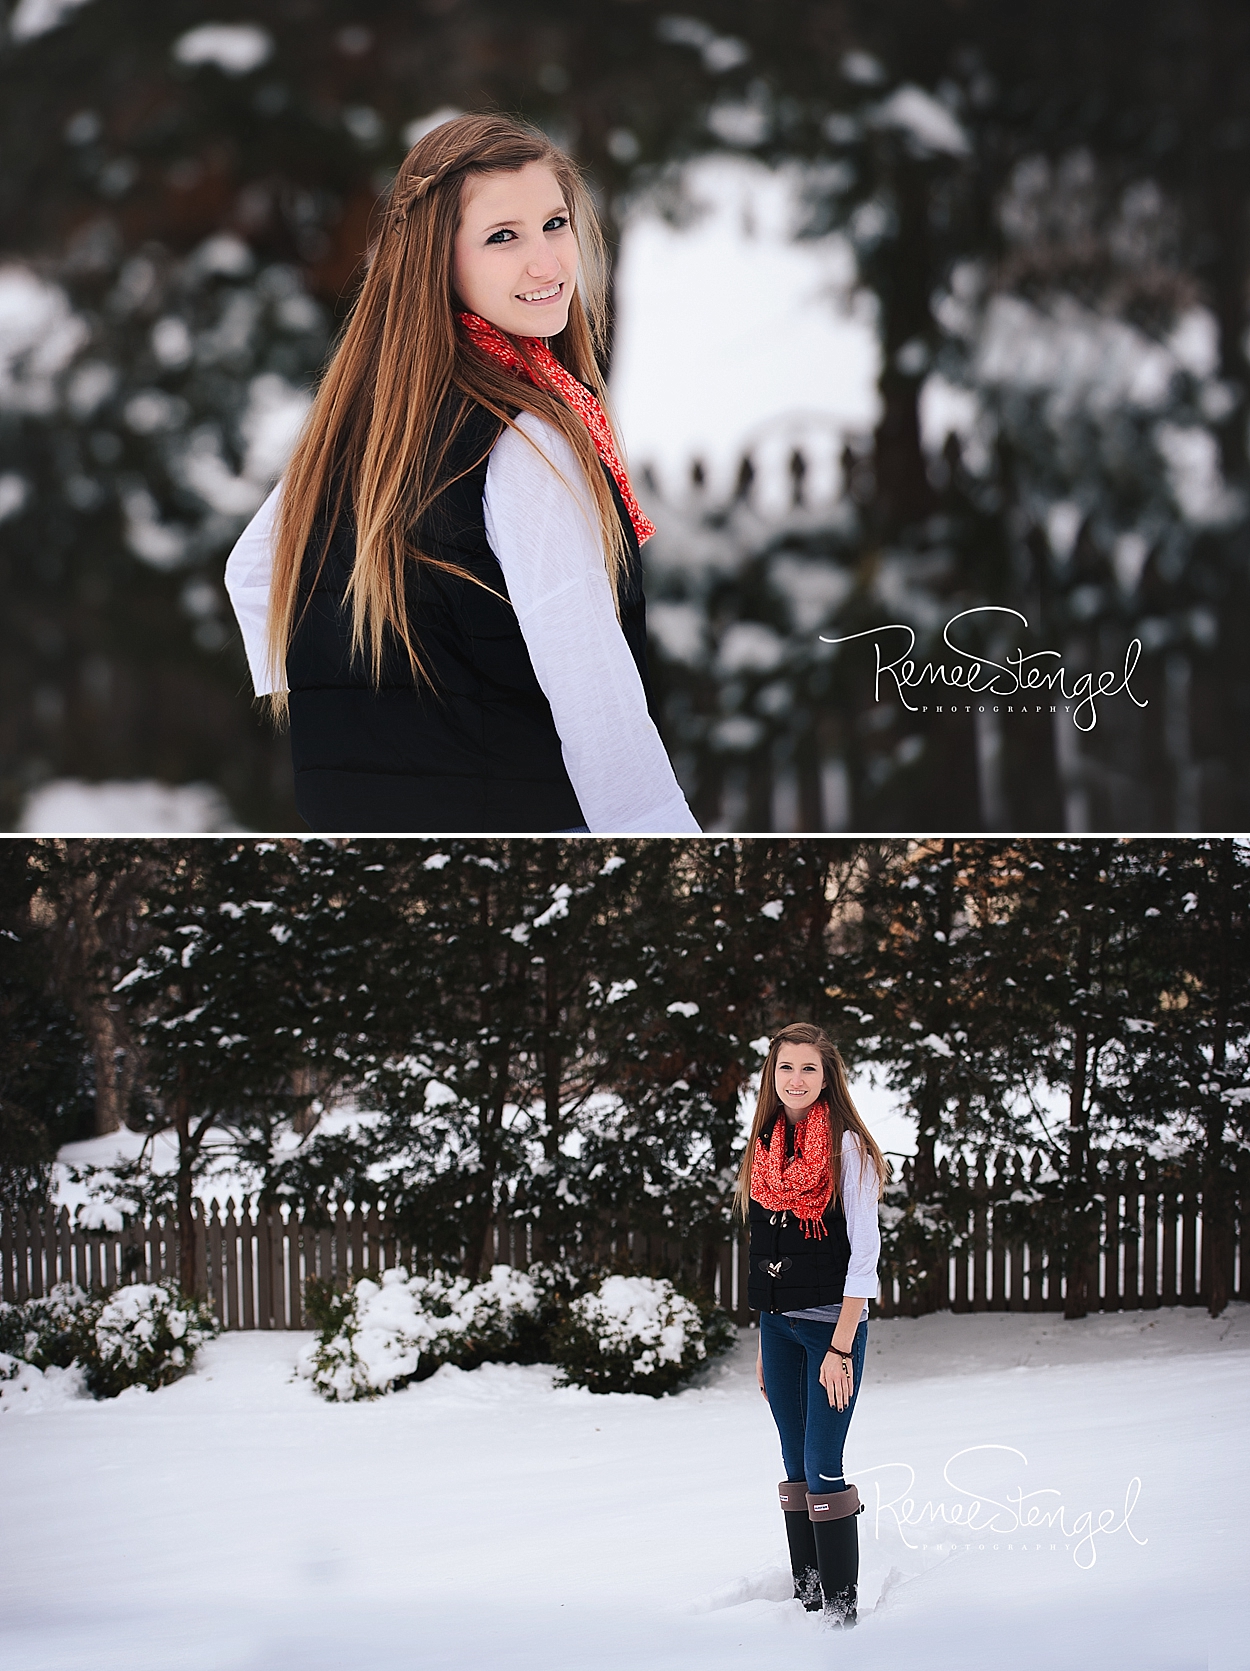 RENEE STENGEL Photography | Charlotte Underwater and Portrait Photographer | Senior Winter Snow Portrait | Nikon 70-200 2.8G